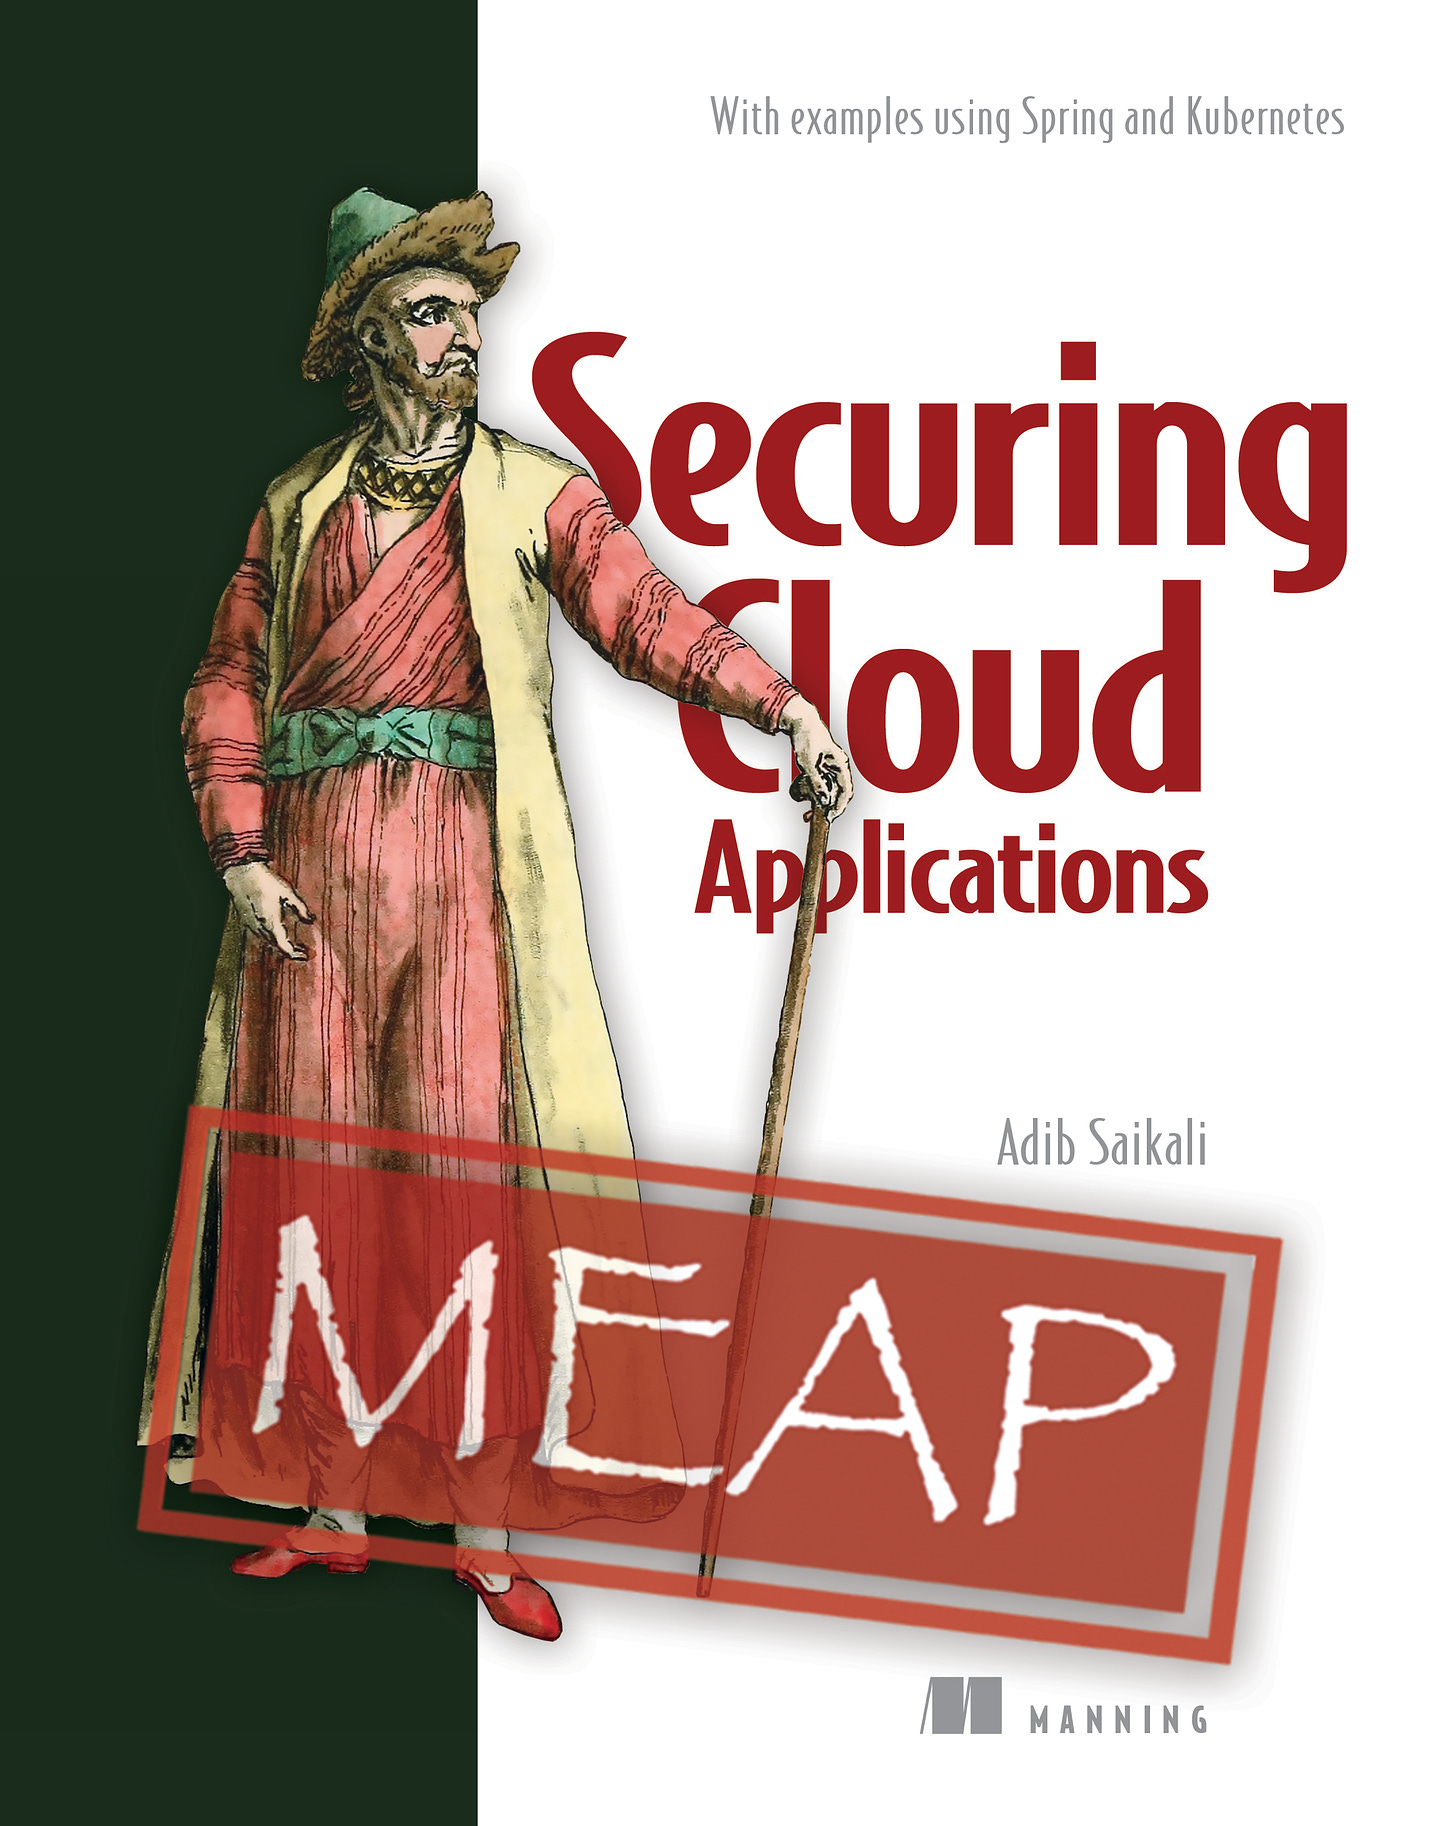 Securing Cloud Applications